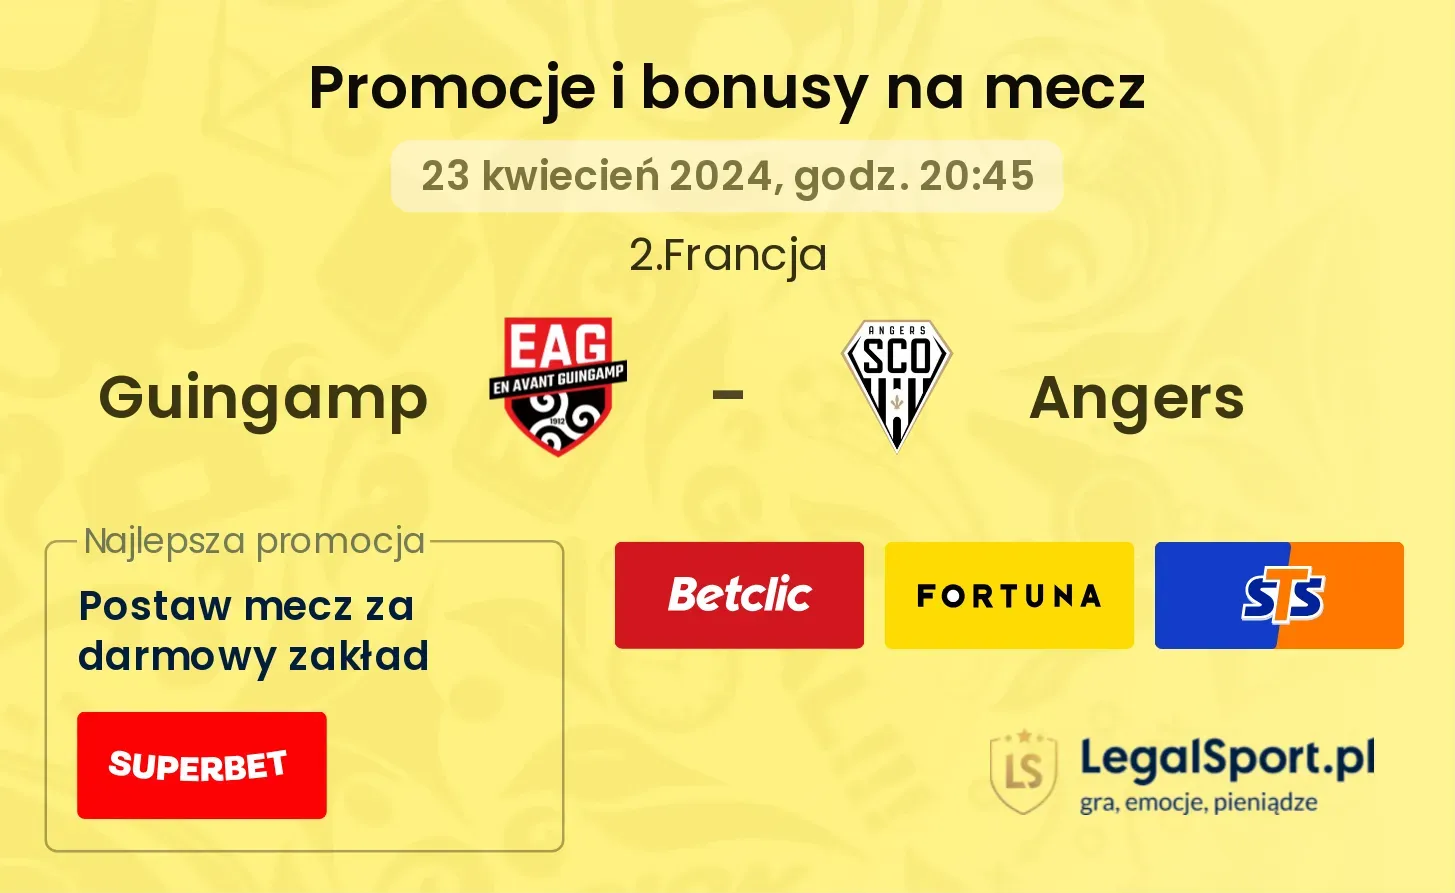 Guingamp - Angers promocje bonusy na mecz